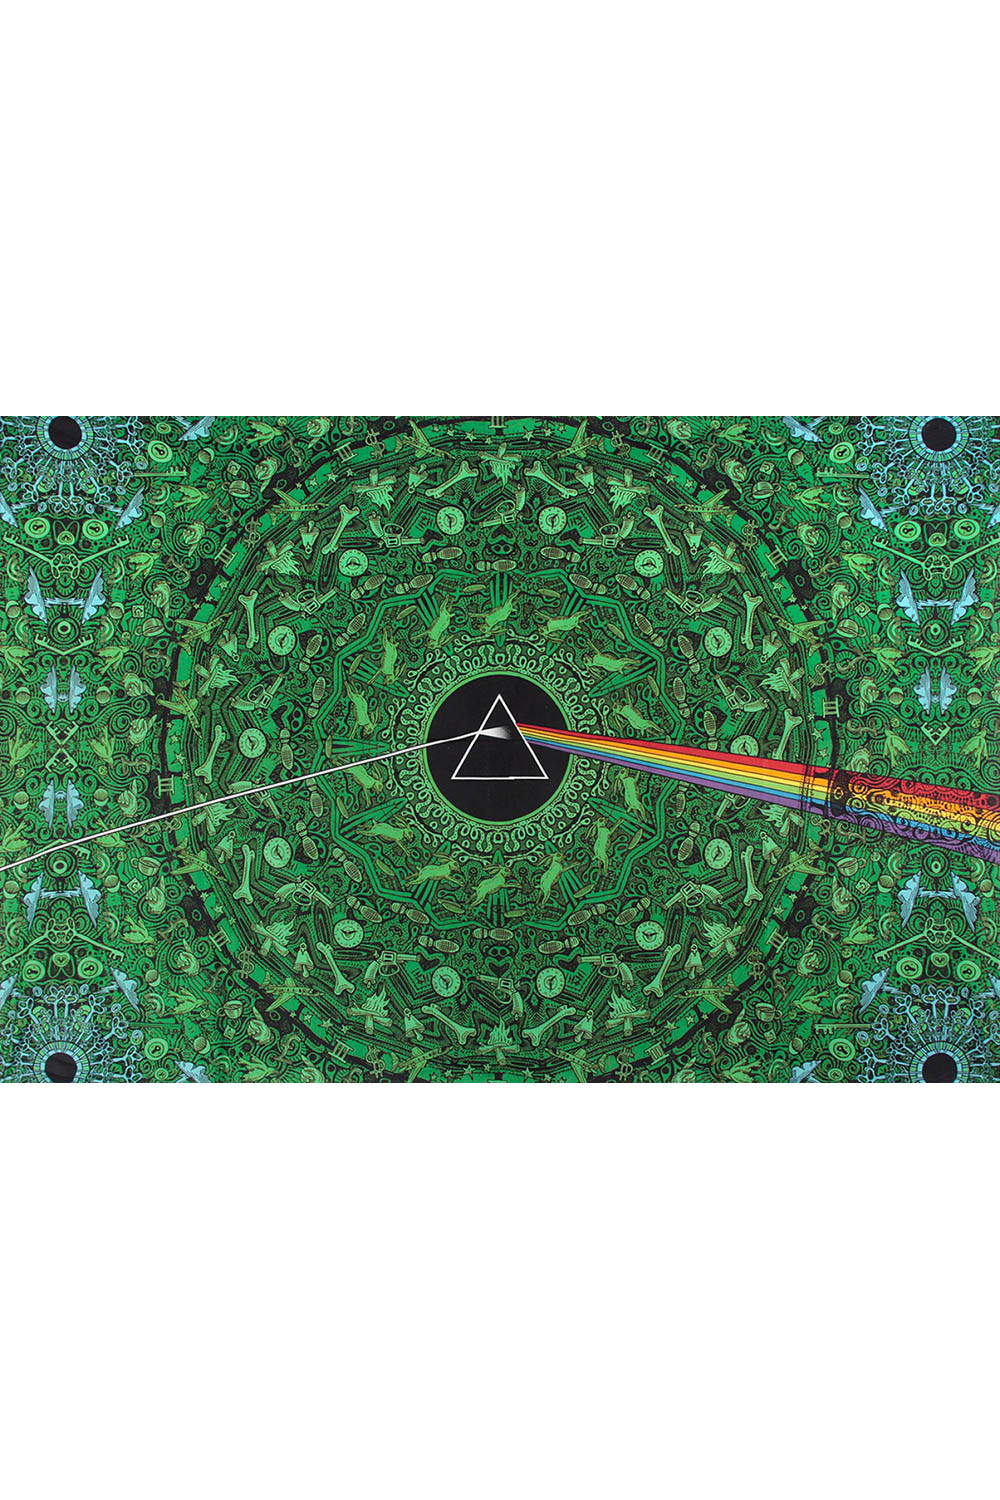 Pink Floyd The Dark Side of the Moon Lyrics Green Tapestry 60x90 - Art by Chris Pinkerton